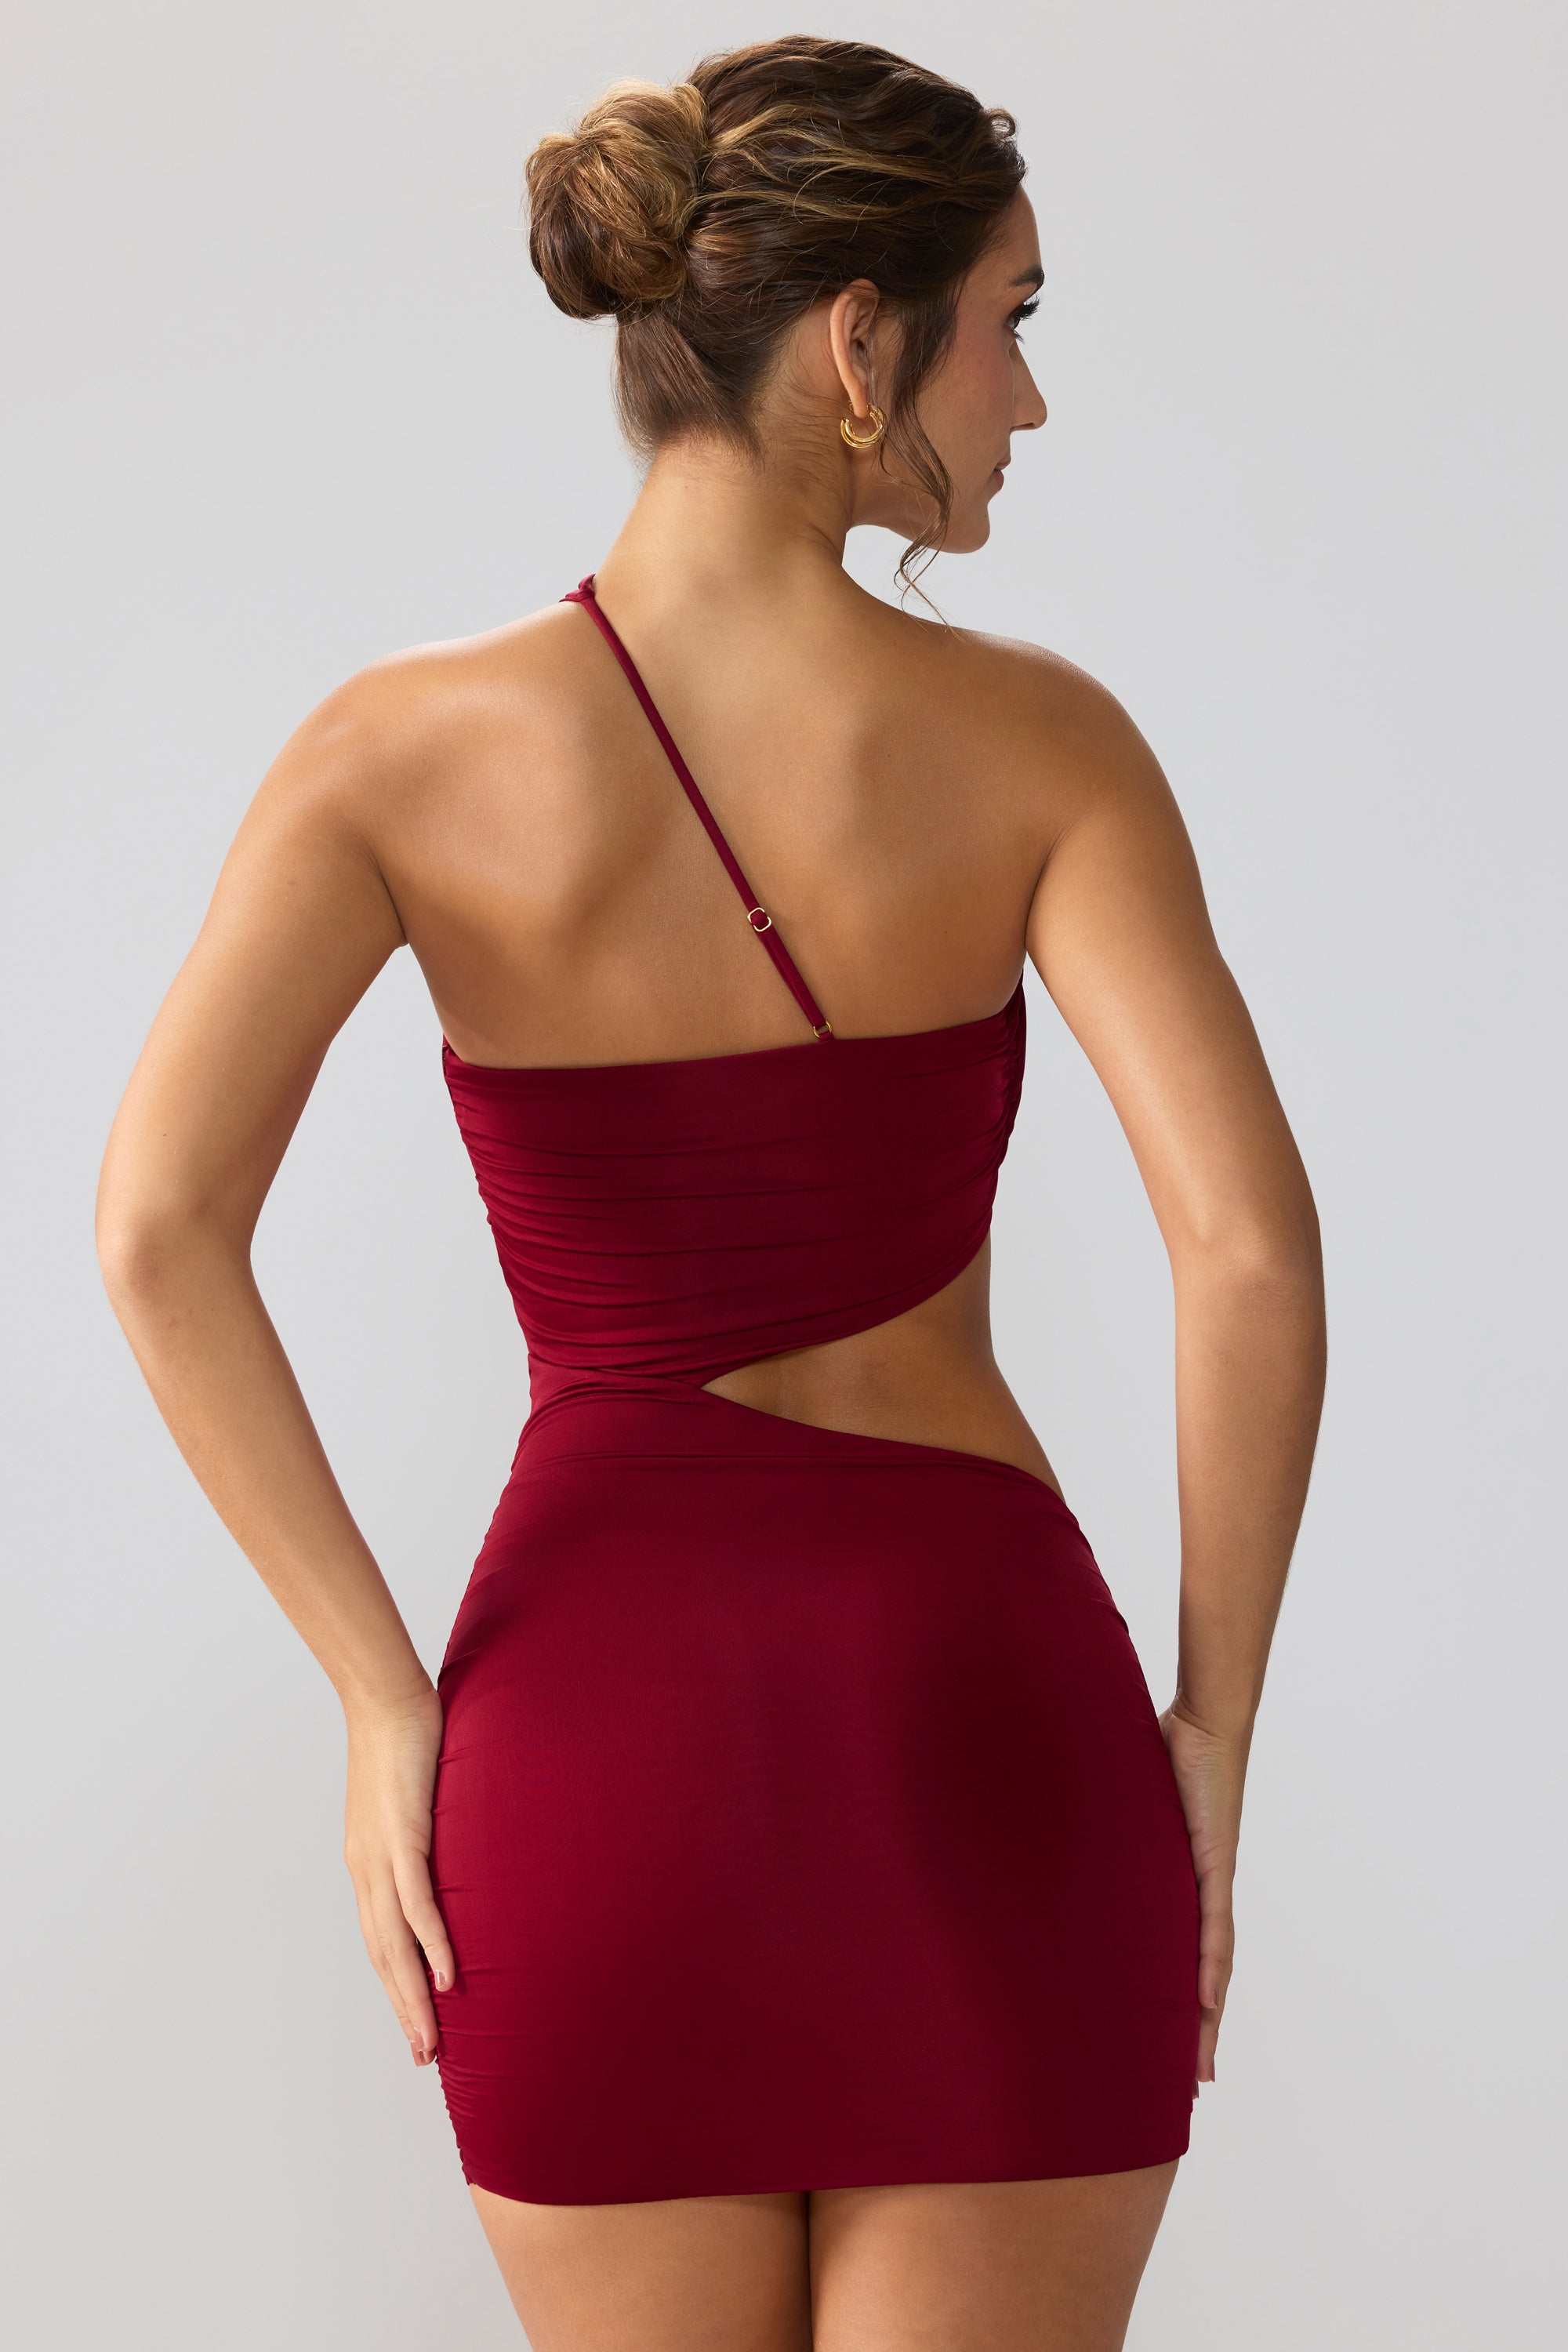 Short Sleeve Red Dress35 Inc, Low Cut Mini Dress, Prom Dress, Cocktail Dress,  New Mom Gift - Etsy